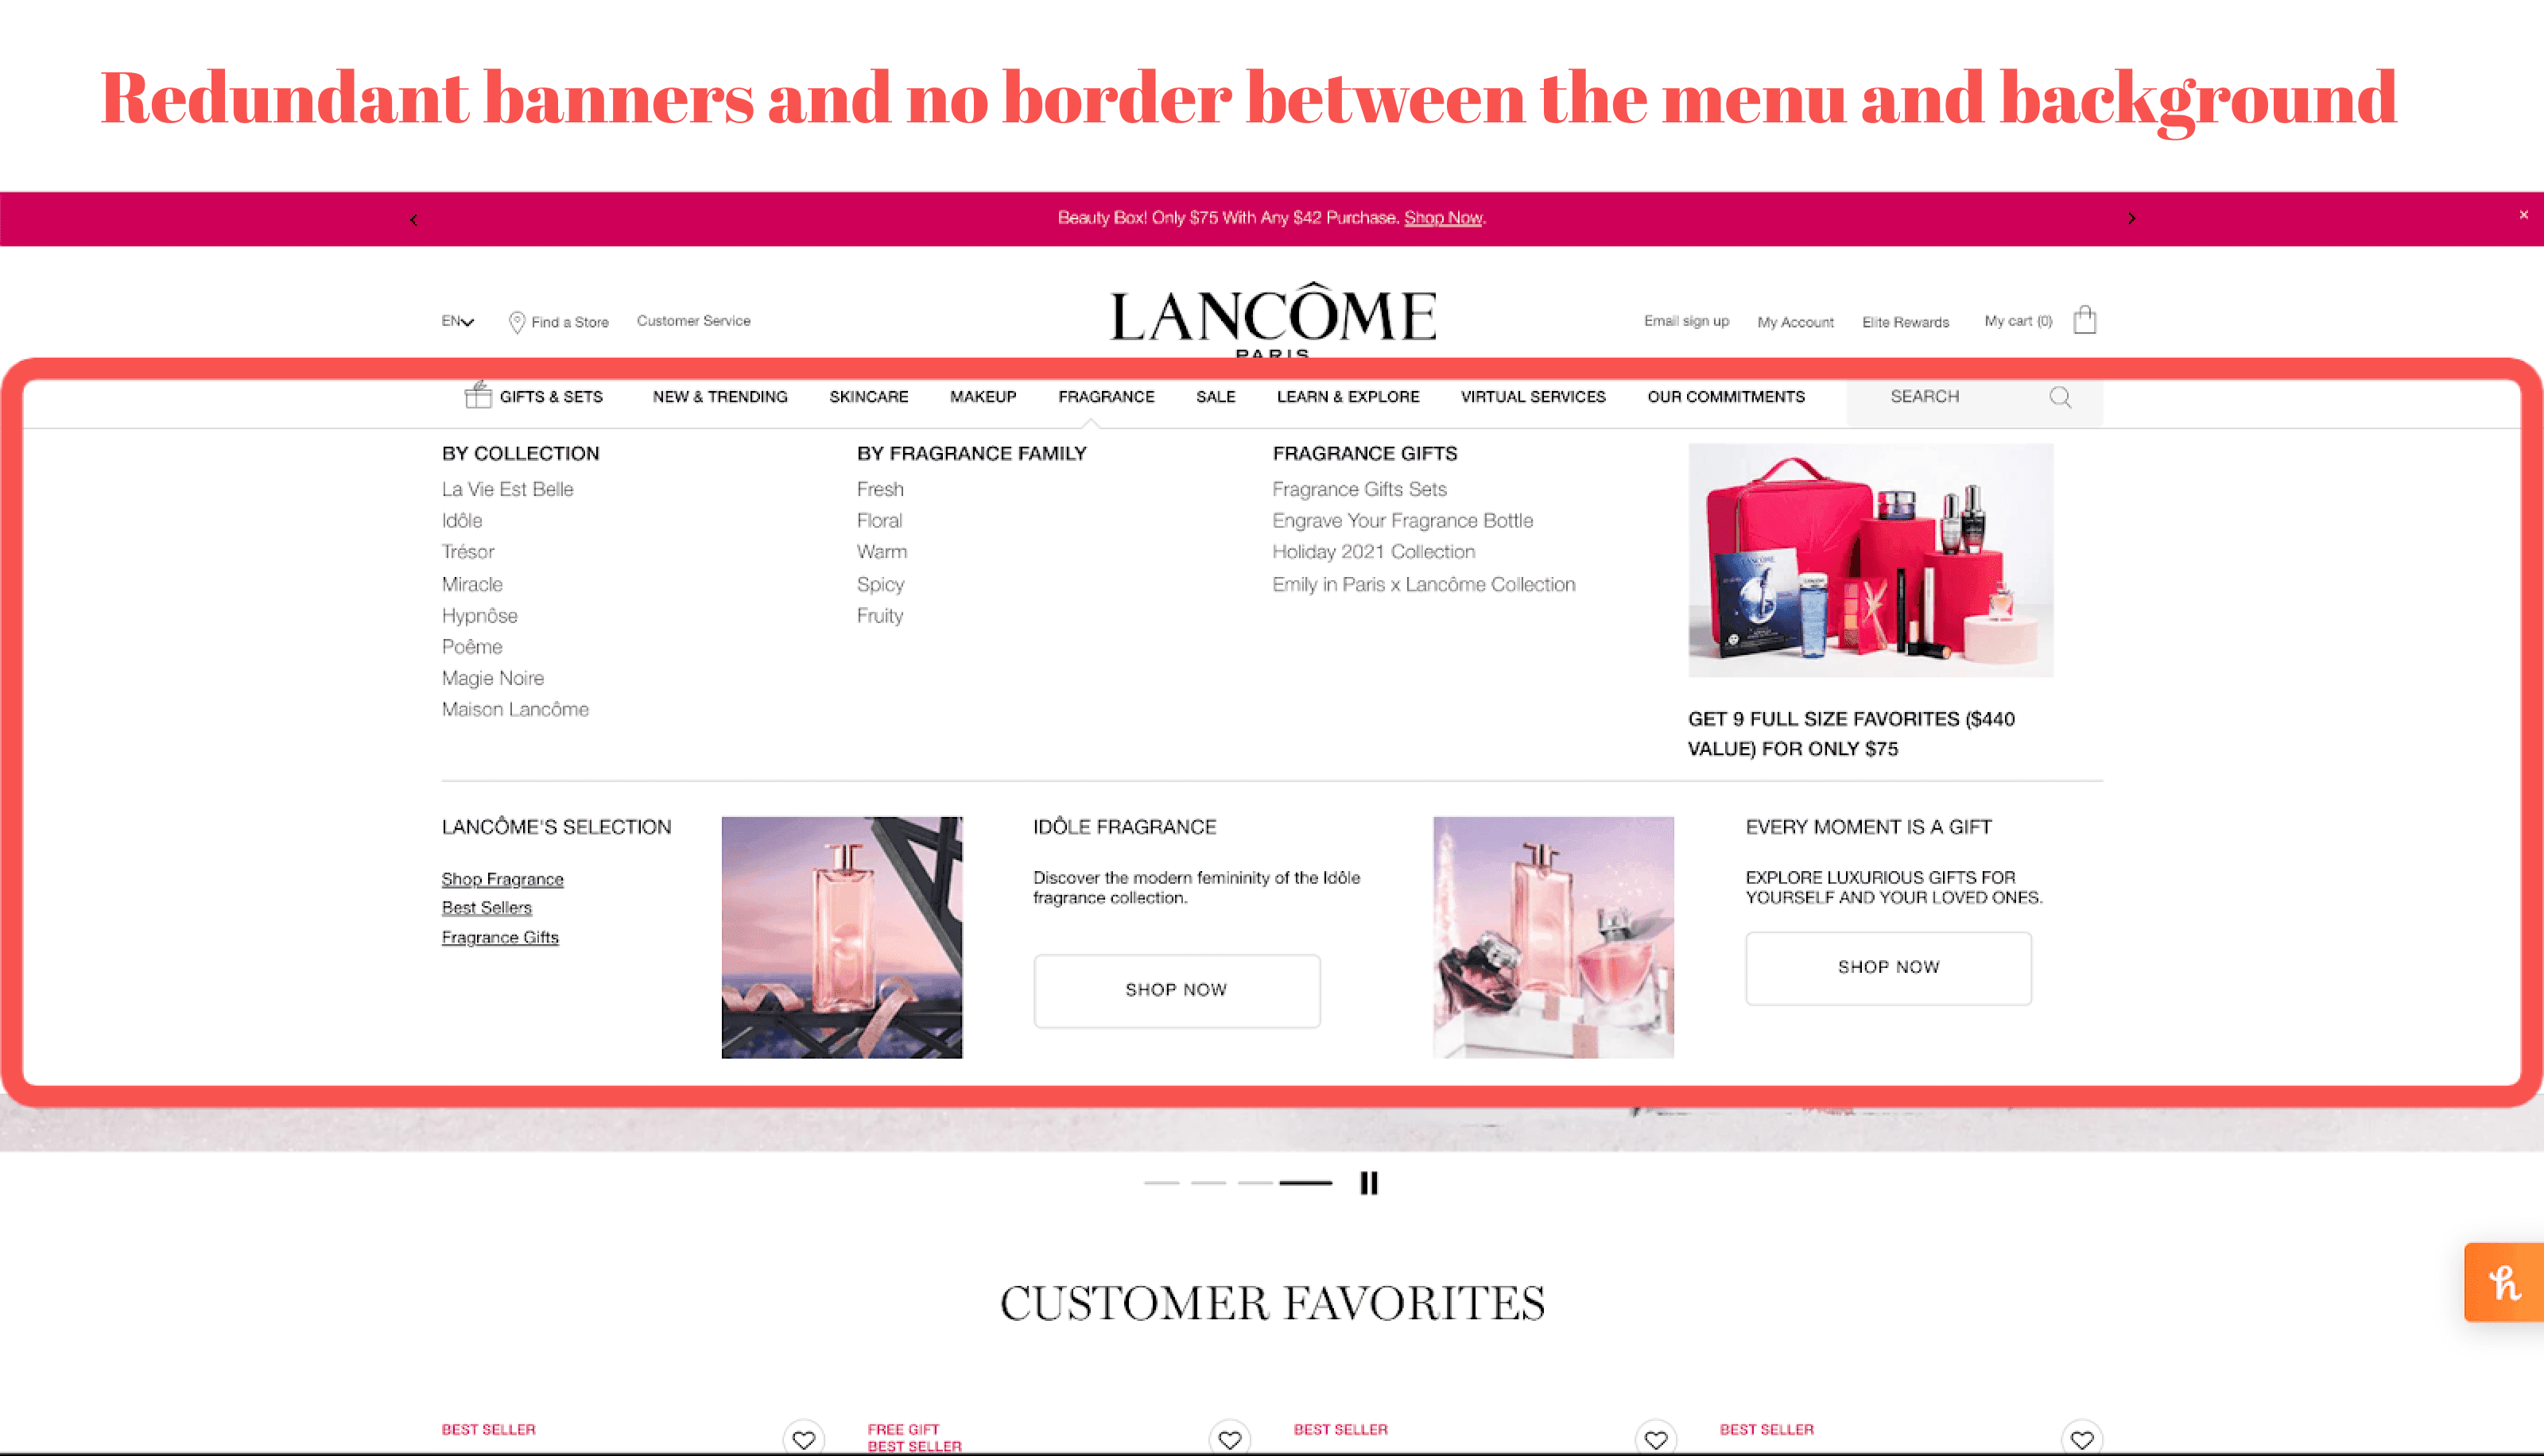 questionable mega menu - Lancome website